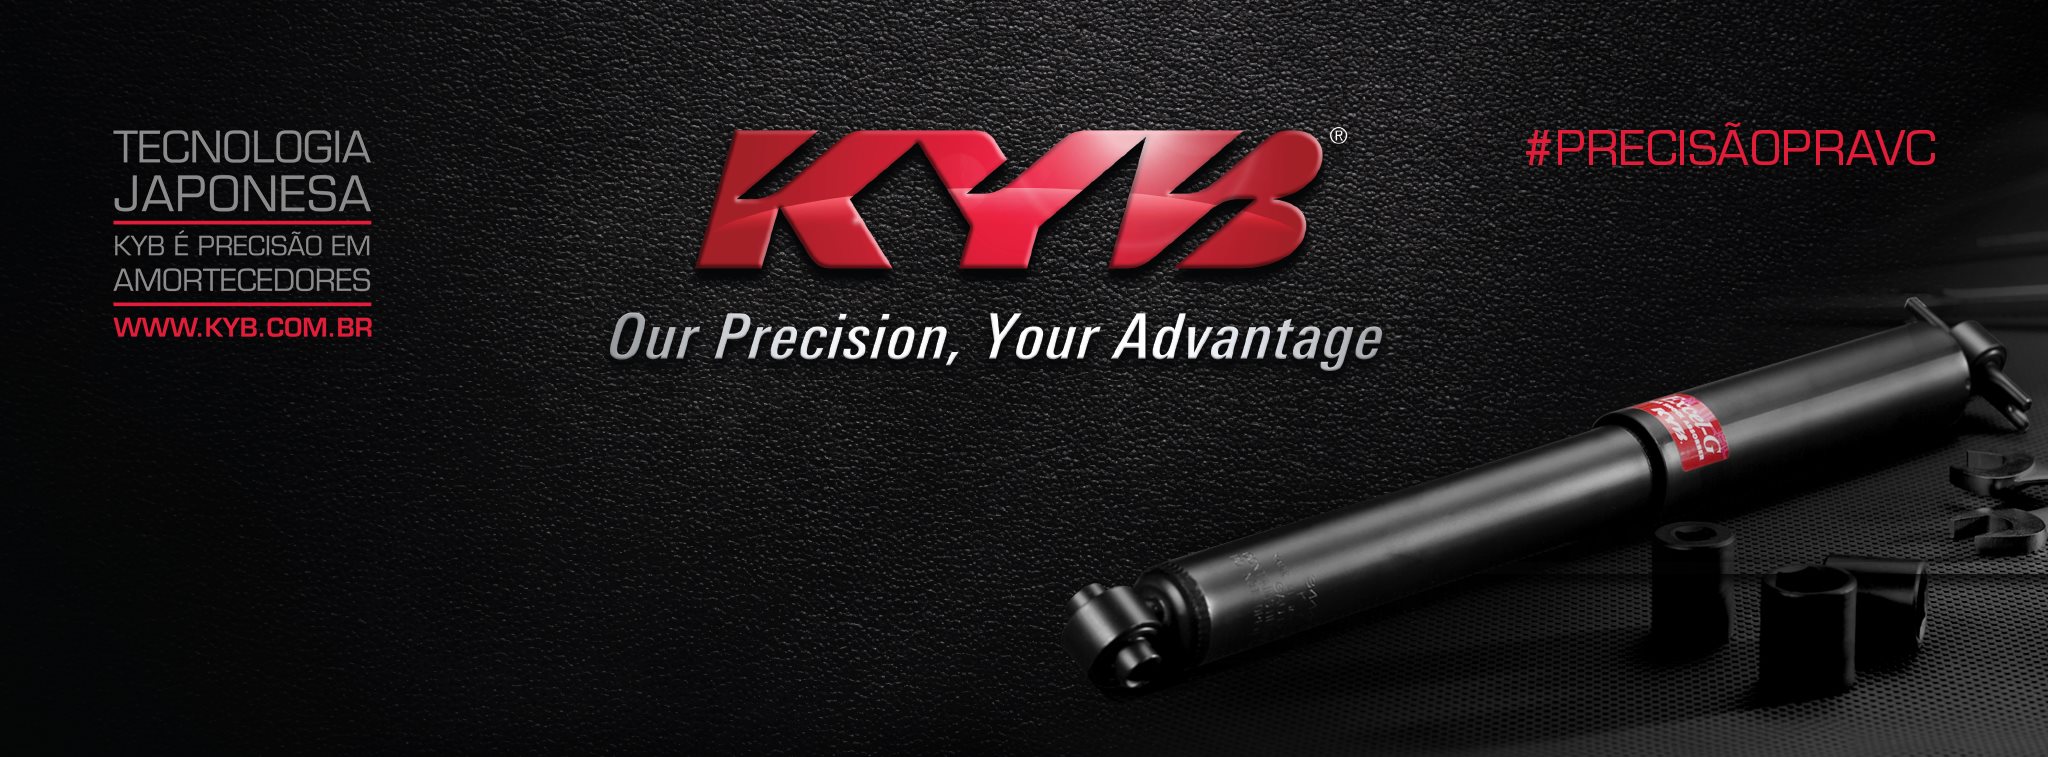 KYB логотип. KYB баннер. KYB надпись. KYB реклама. Срок службы стойки